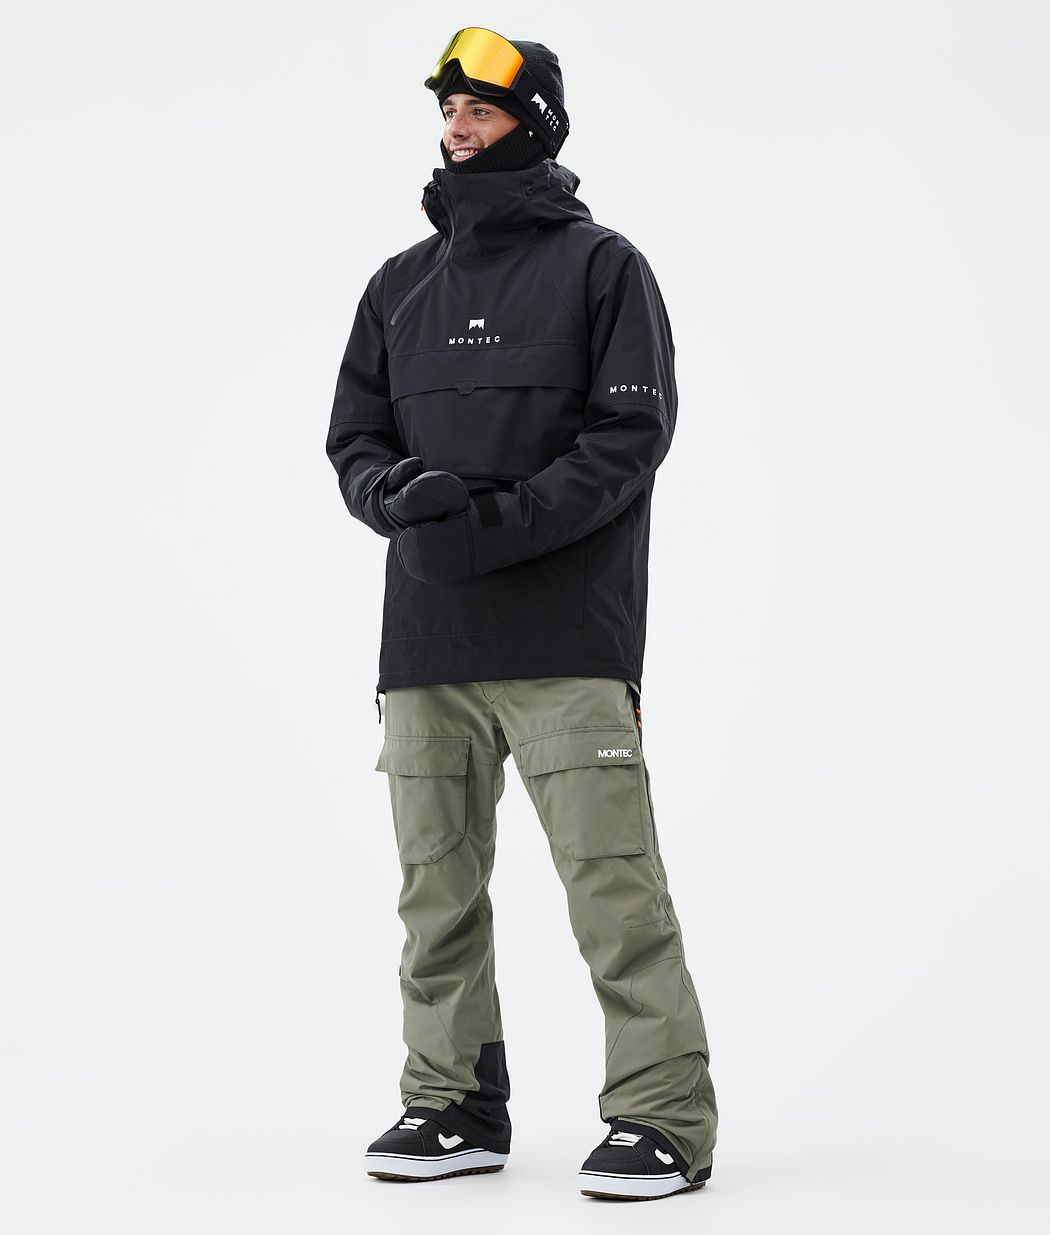 Kirin Pantalon de Snowboard Homme Greenish